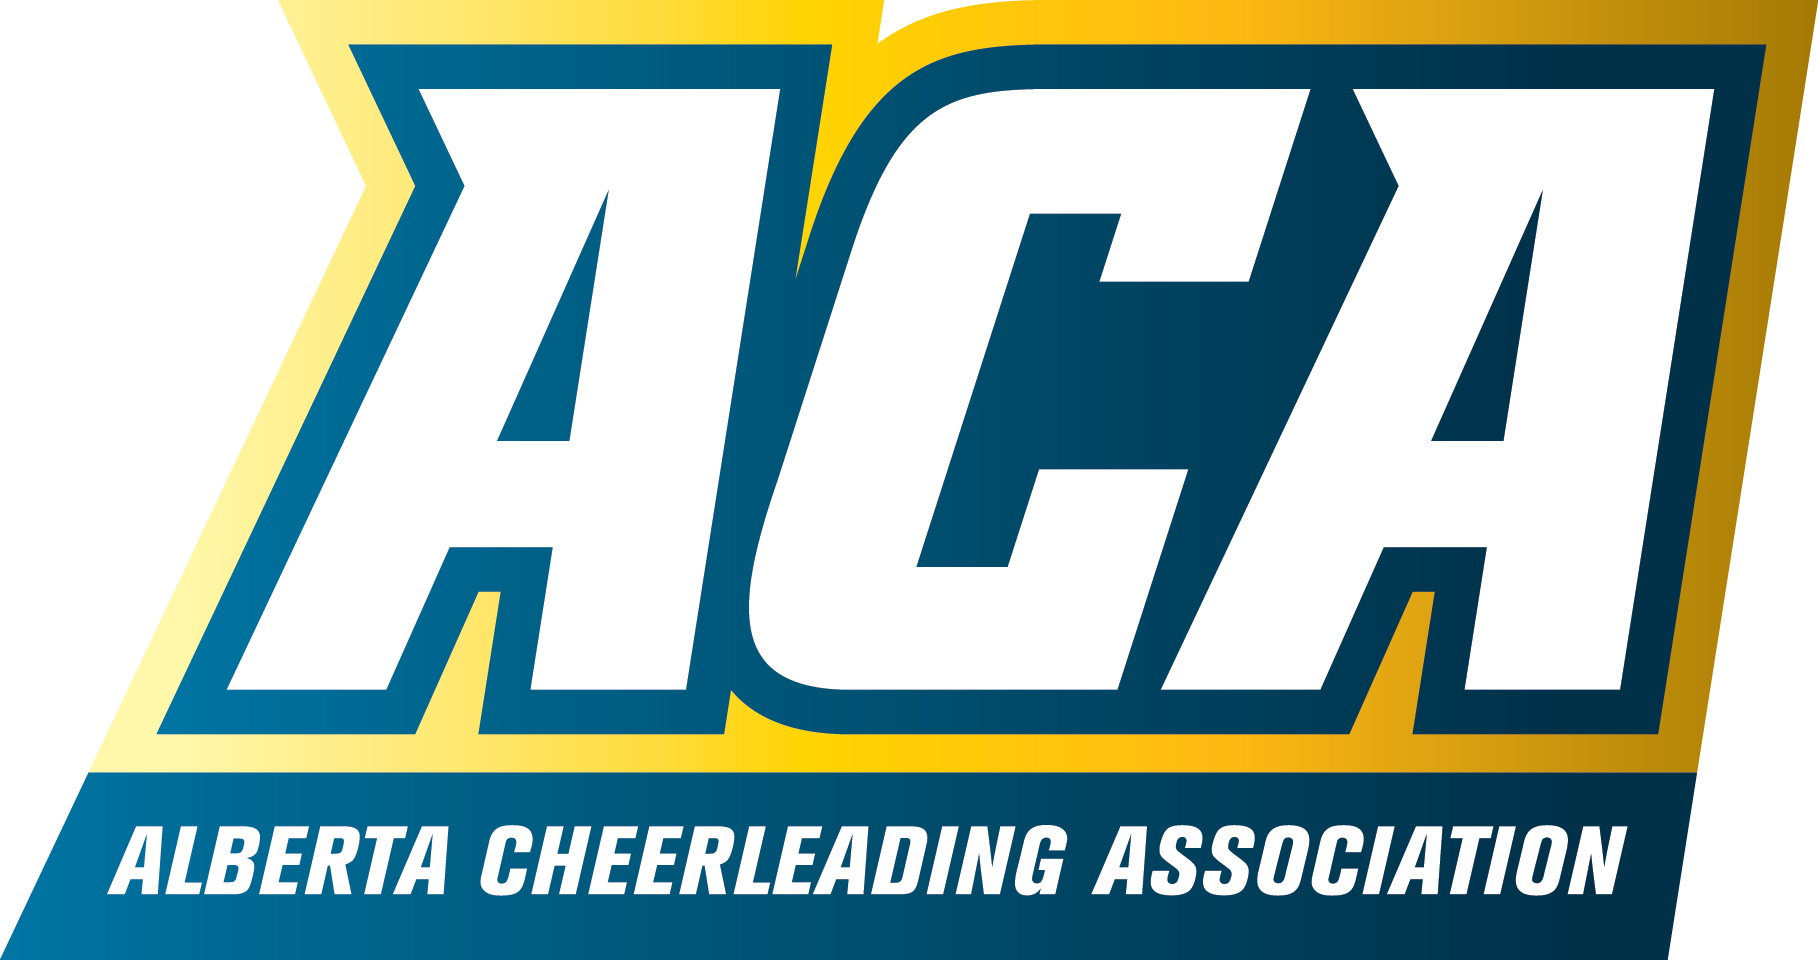 Alberta Cheerleading Association